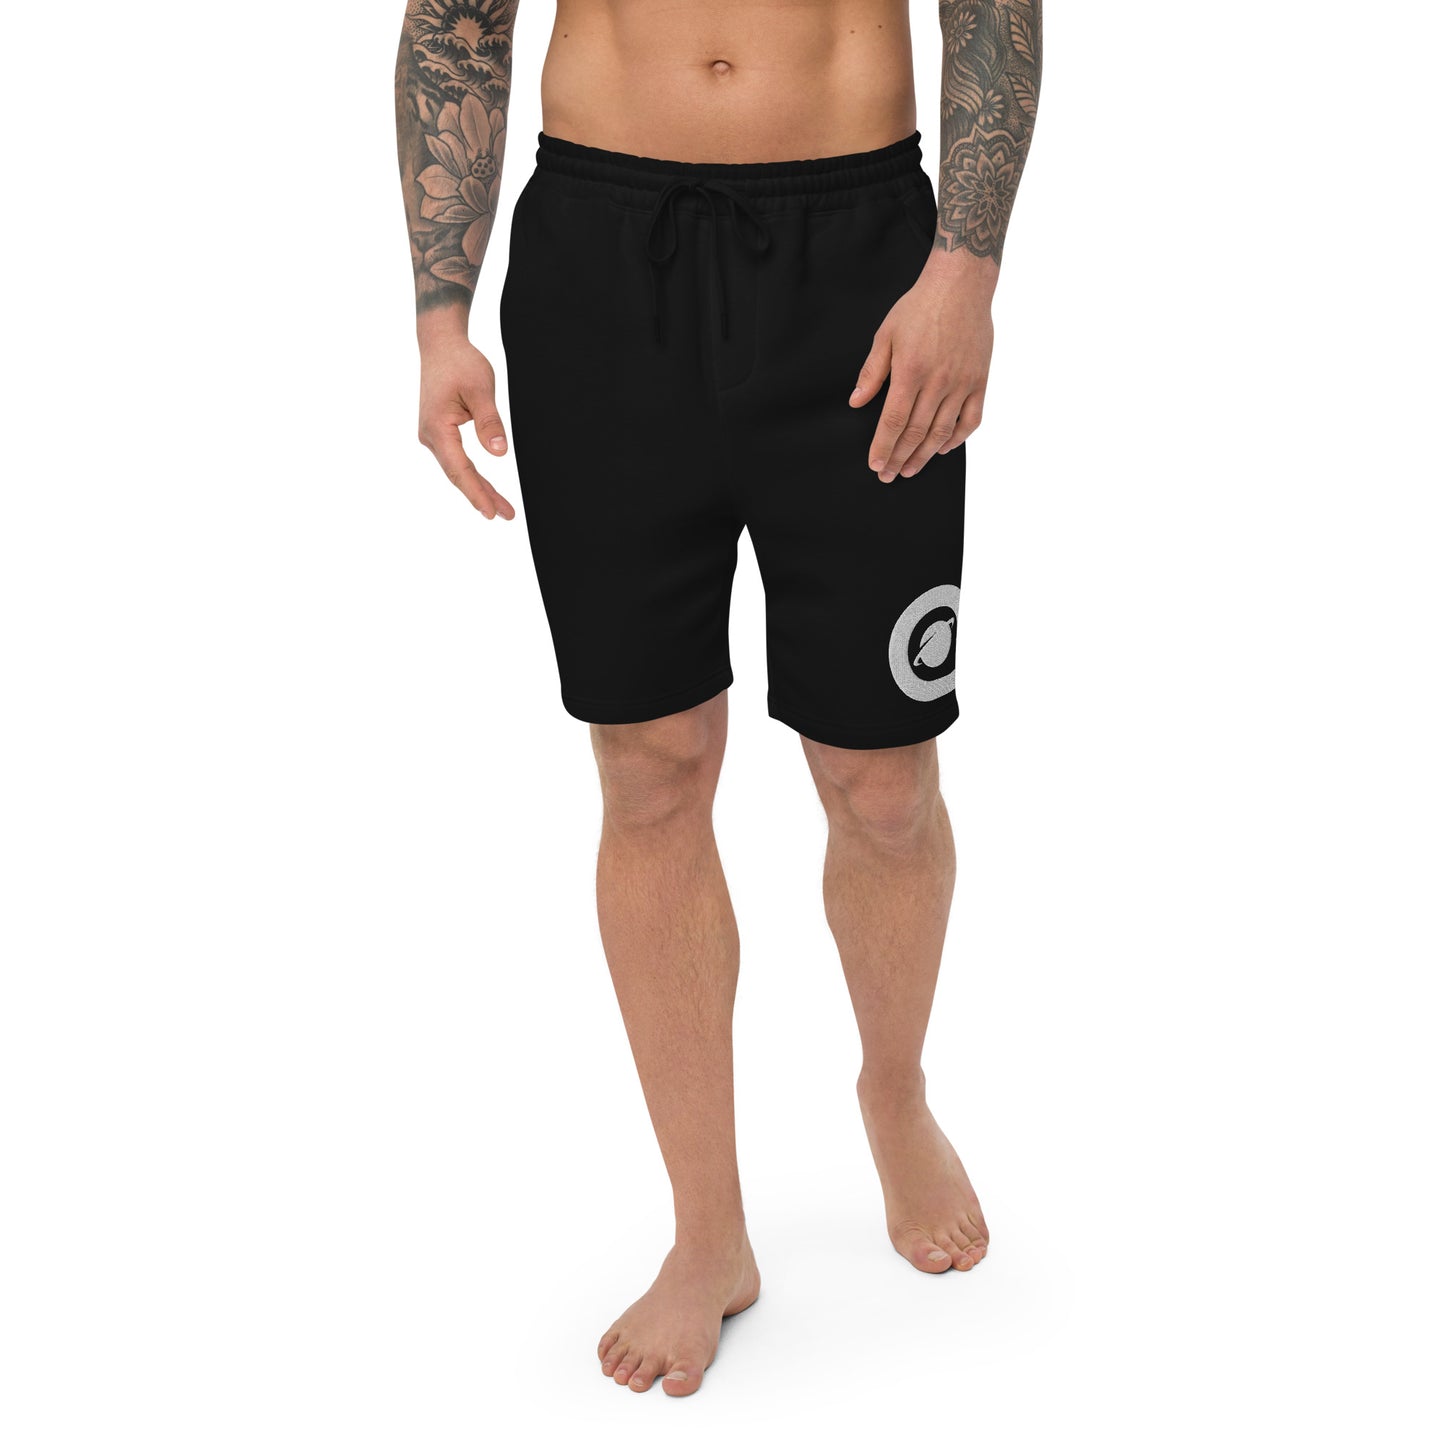 AvatarStarz Men's fleece shorts - Black/White Icon Embroidered